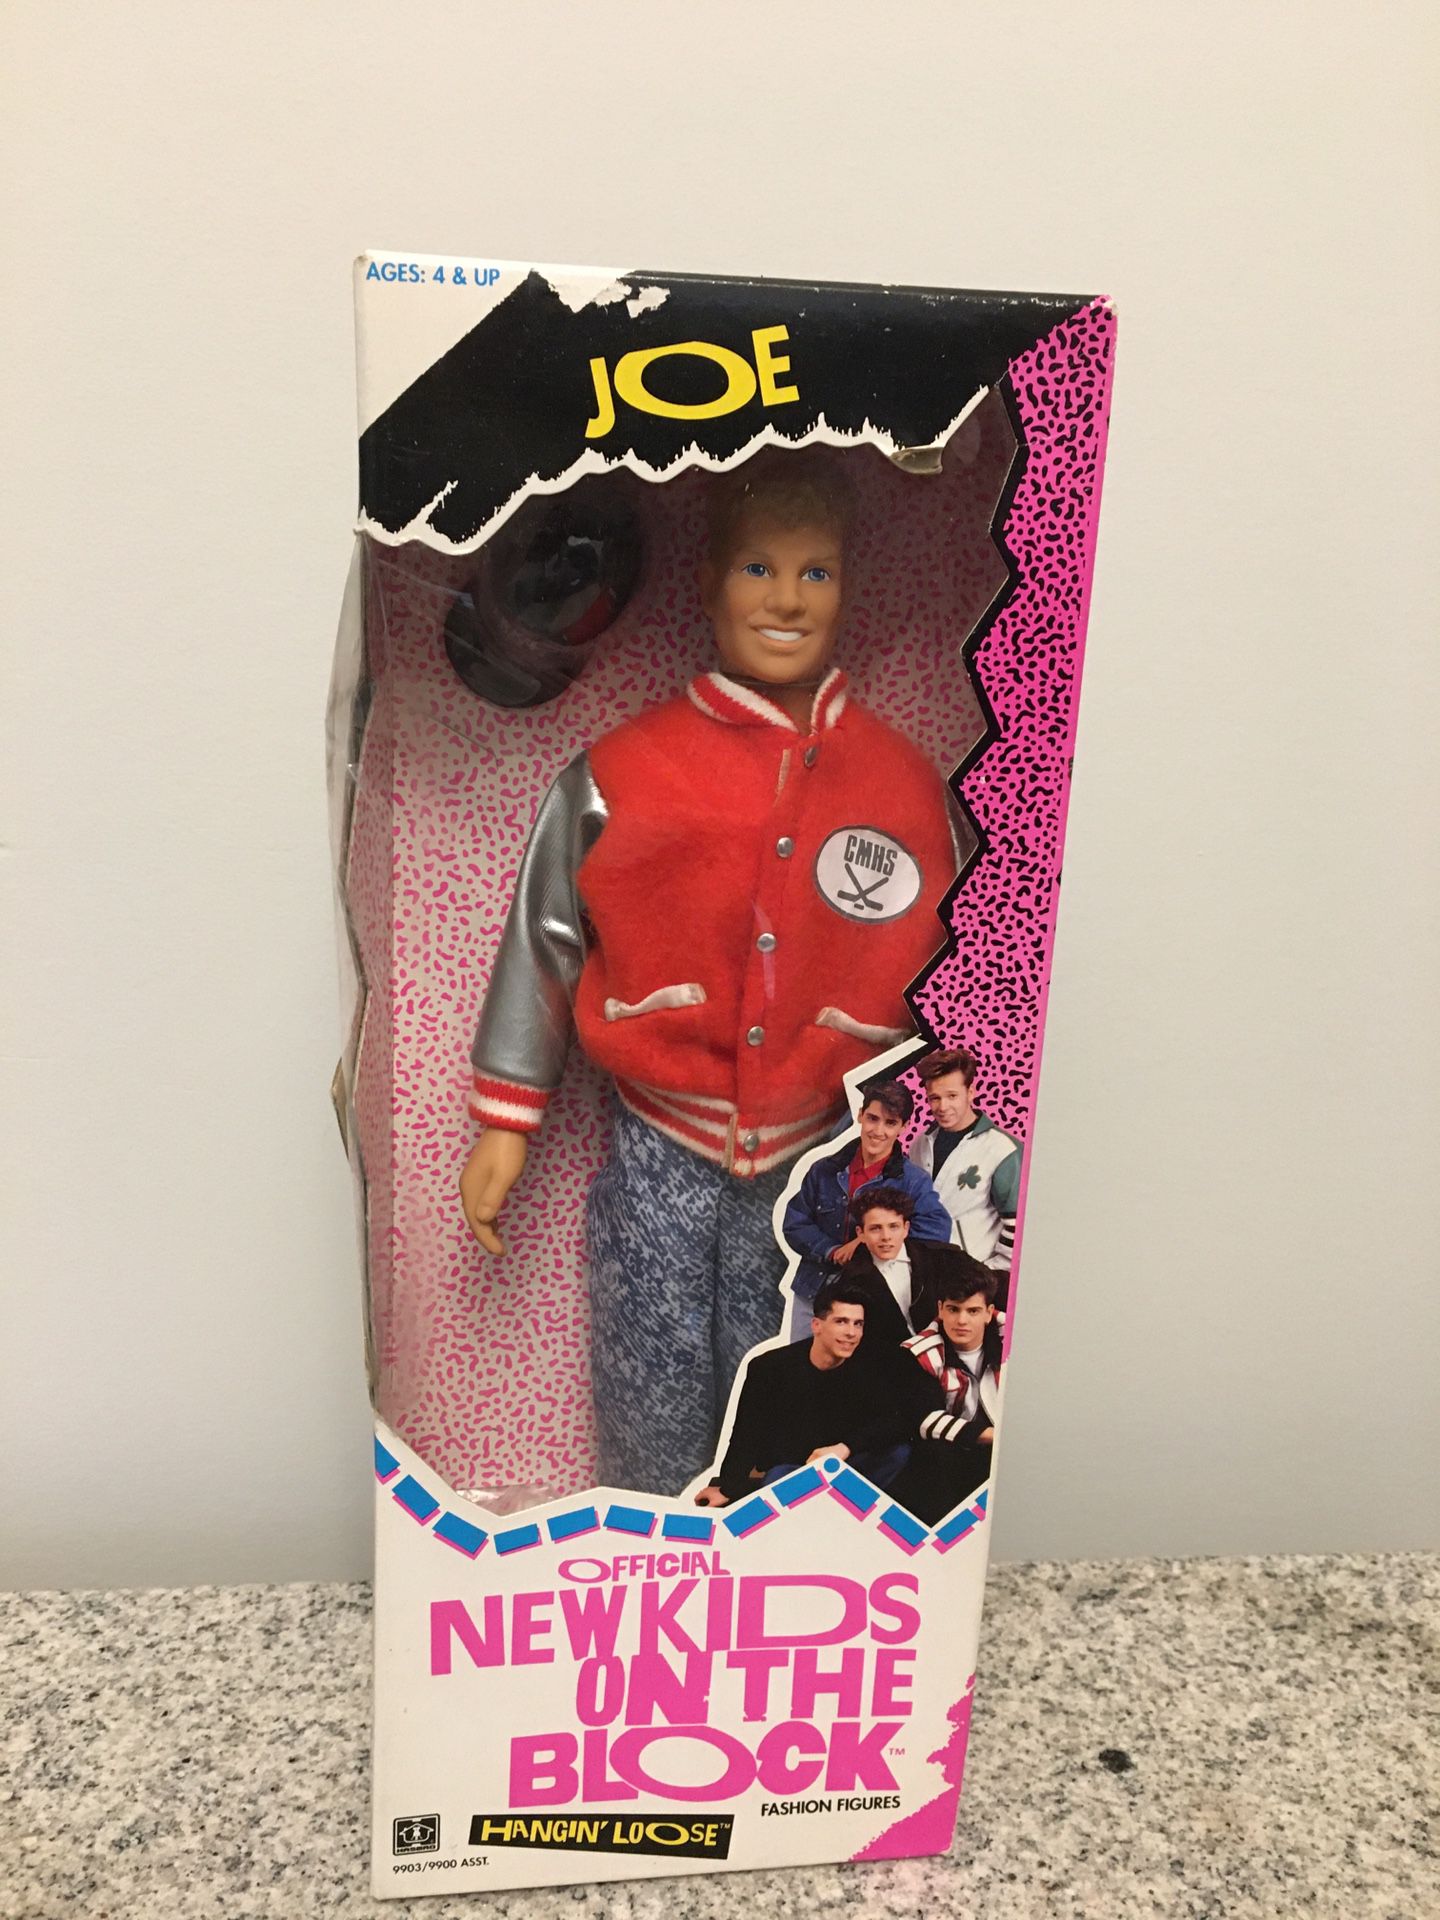 Joe New Kids on the Block doll